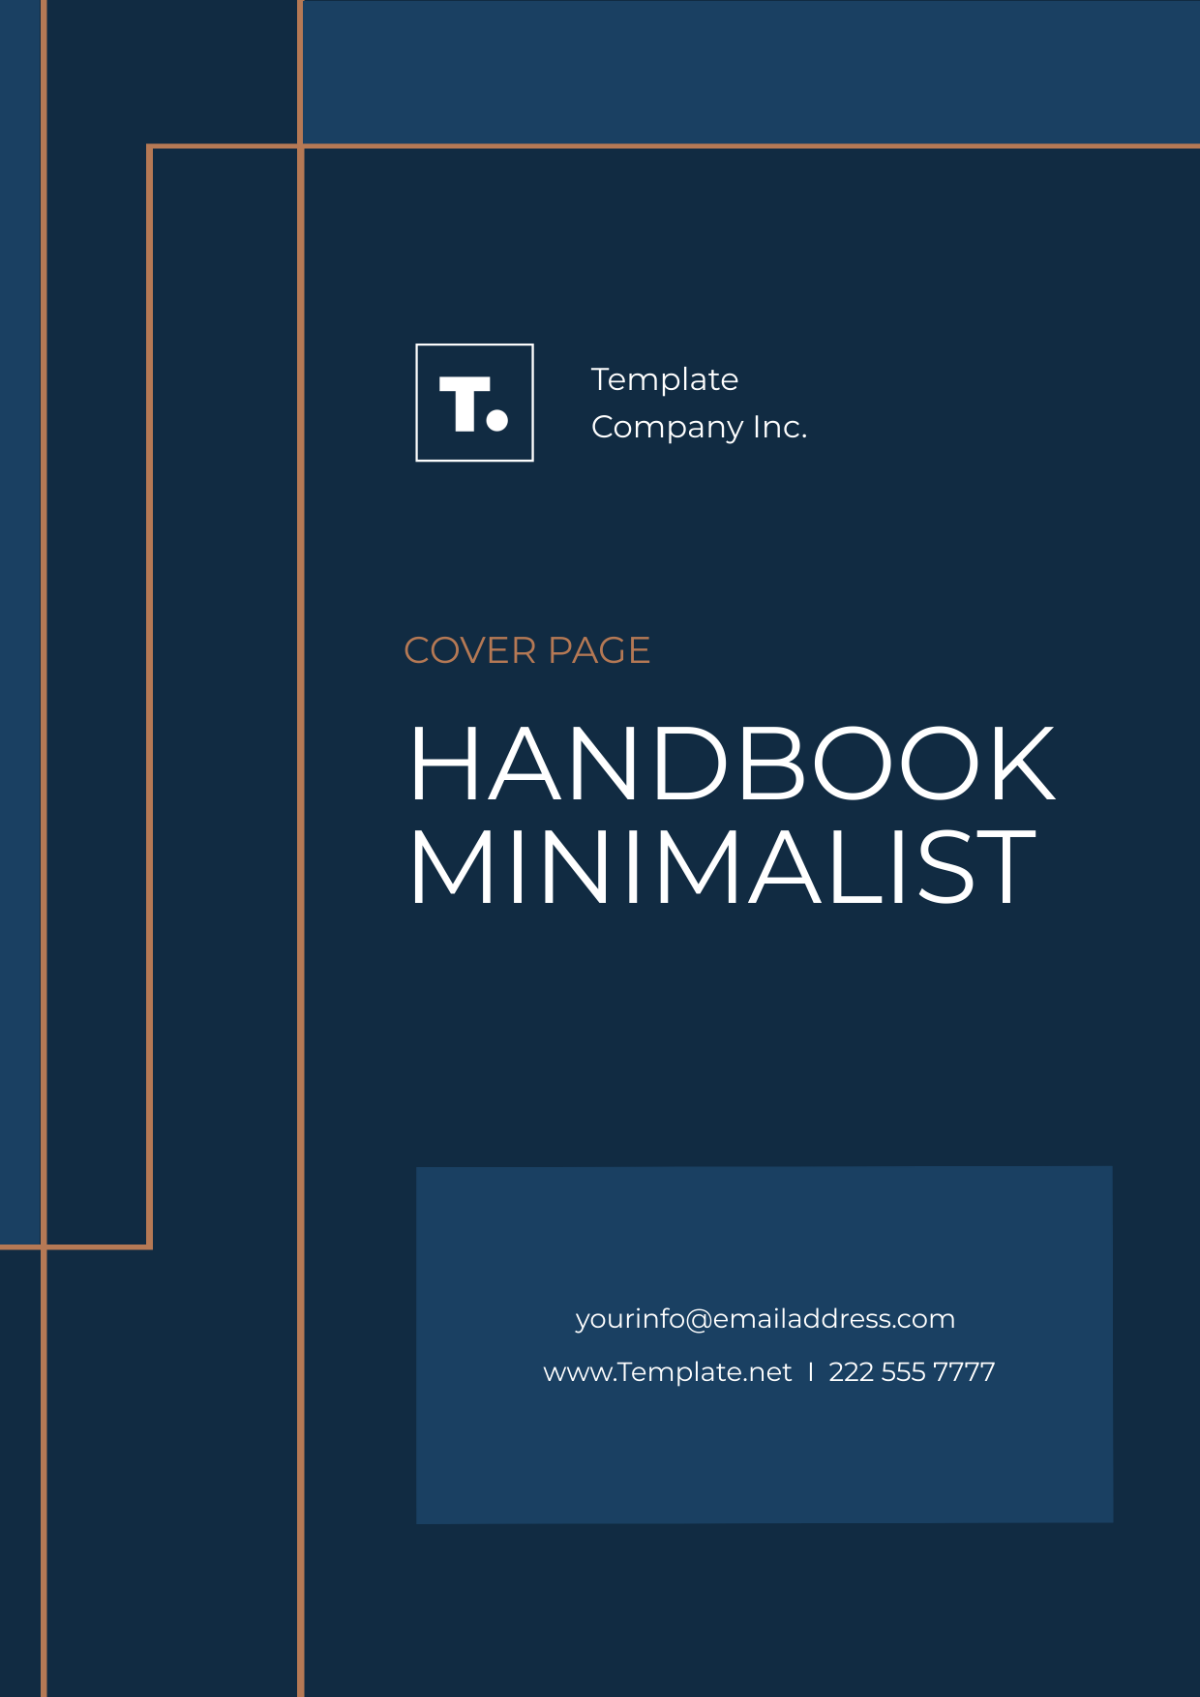 Handbook Minimalist Cover Page Template